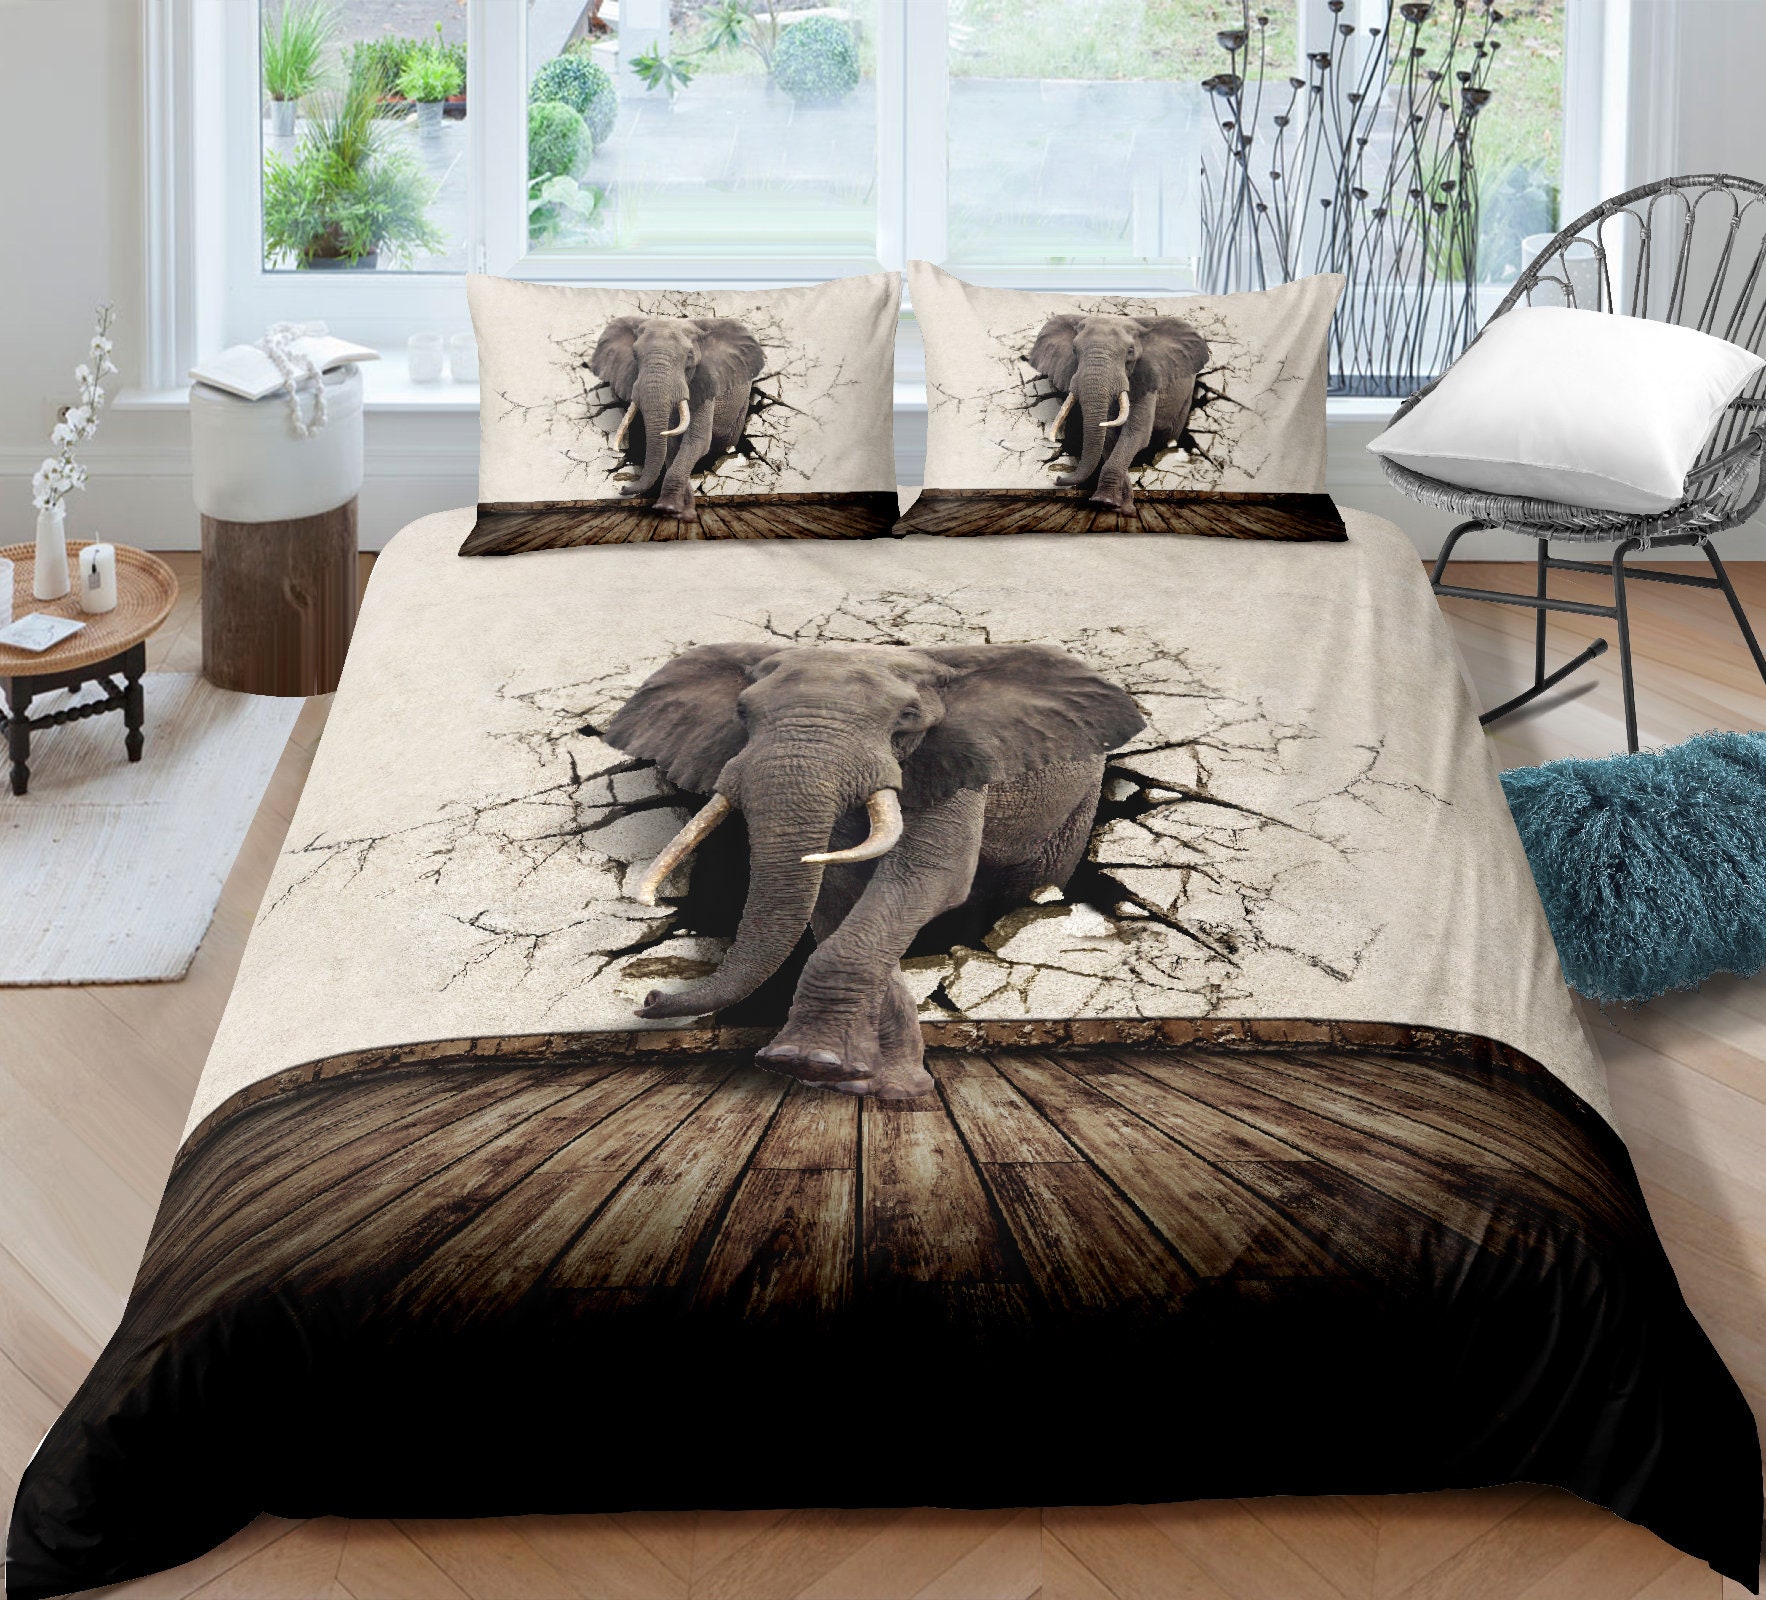 Elephant Mandala King Size Bed Bedding Set Duvet Quilt Cover And Pillowcases 